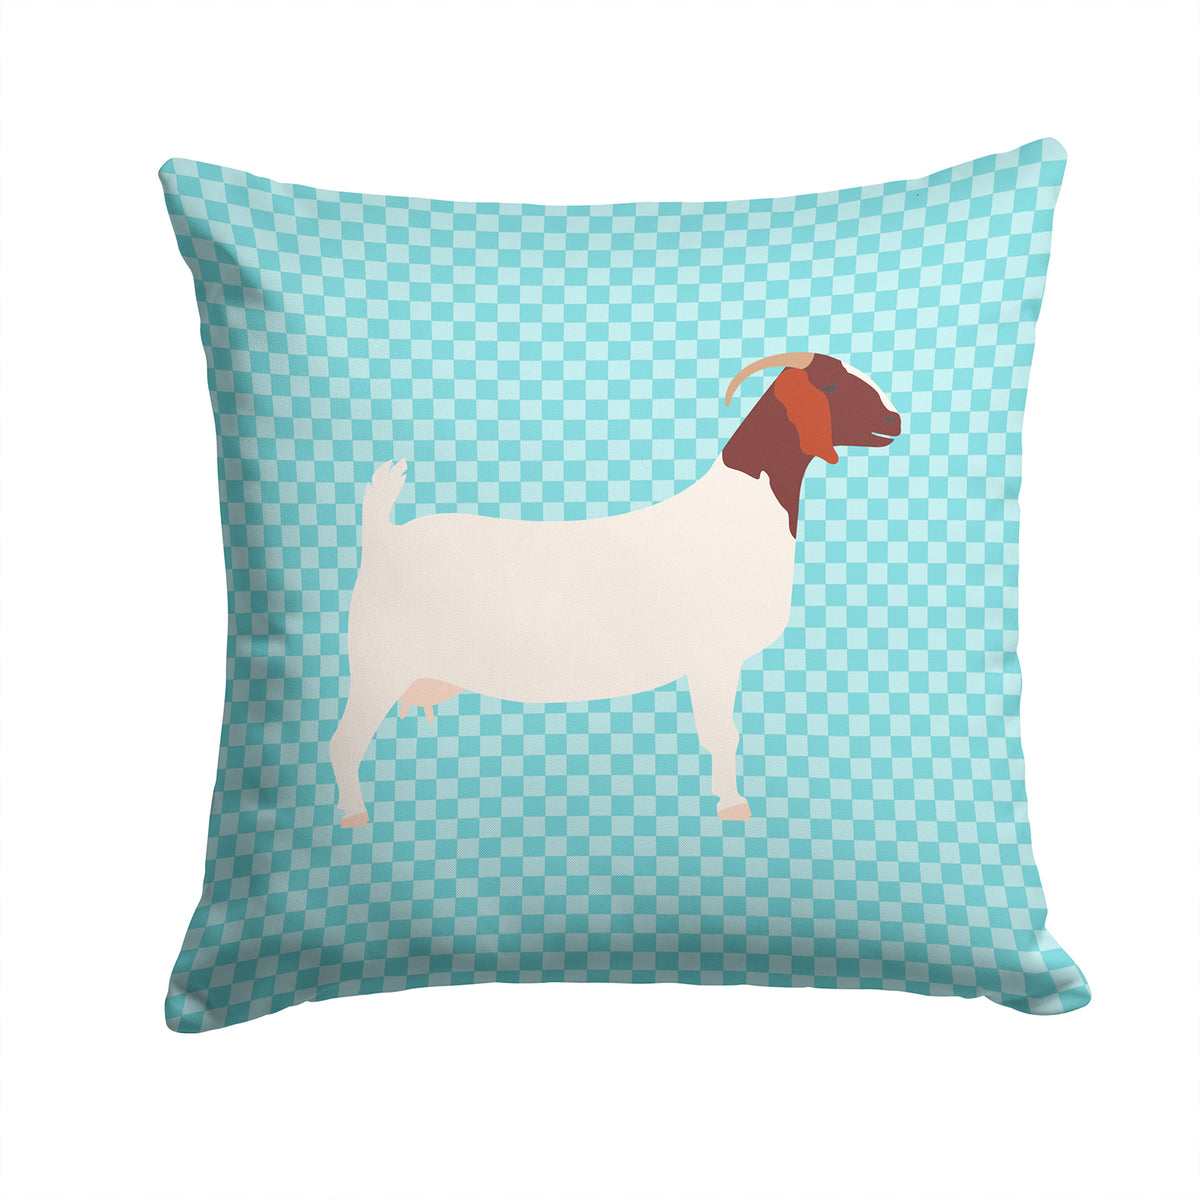 Boer Goat Blue Check Fabric Decorative Pillow BB8060PW1414 - the-store.com